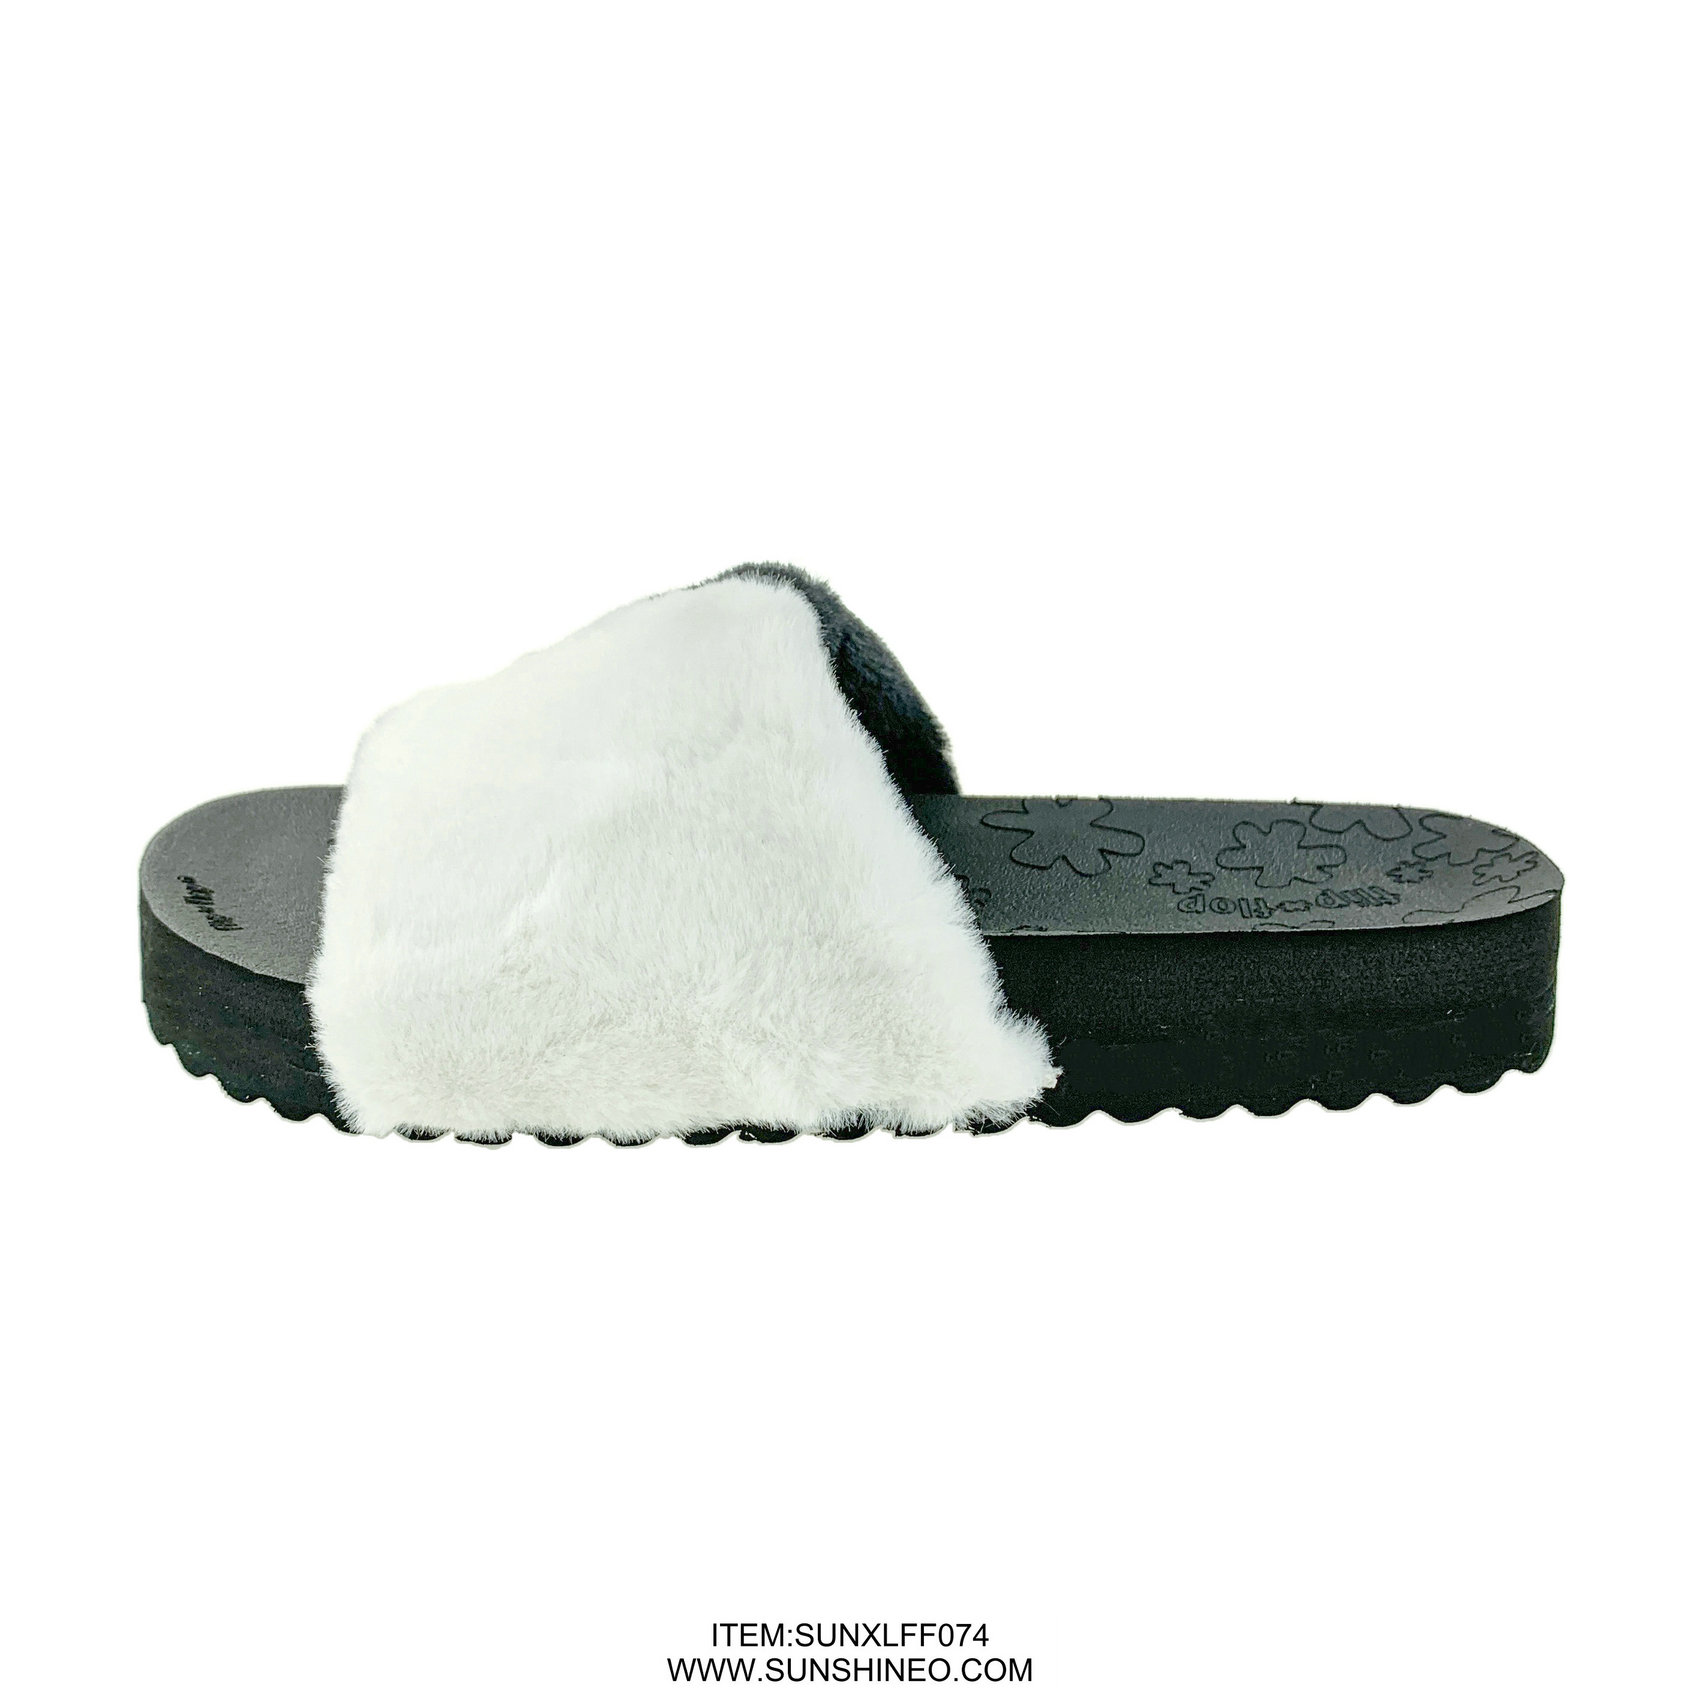 SUNXLFF074 fur flip flop sandals winter slippers